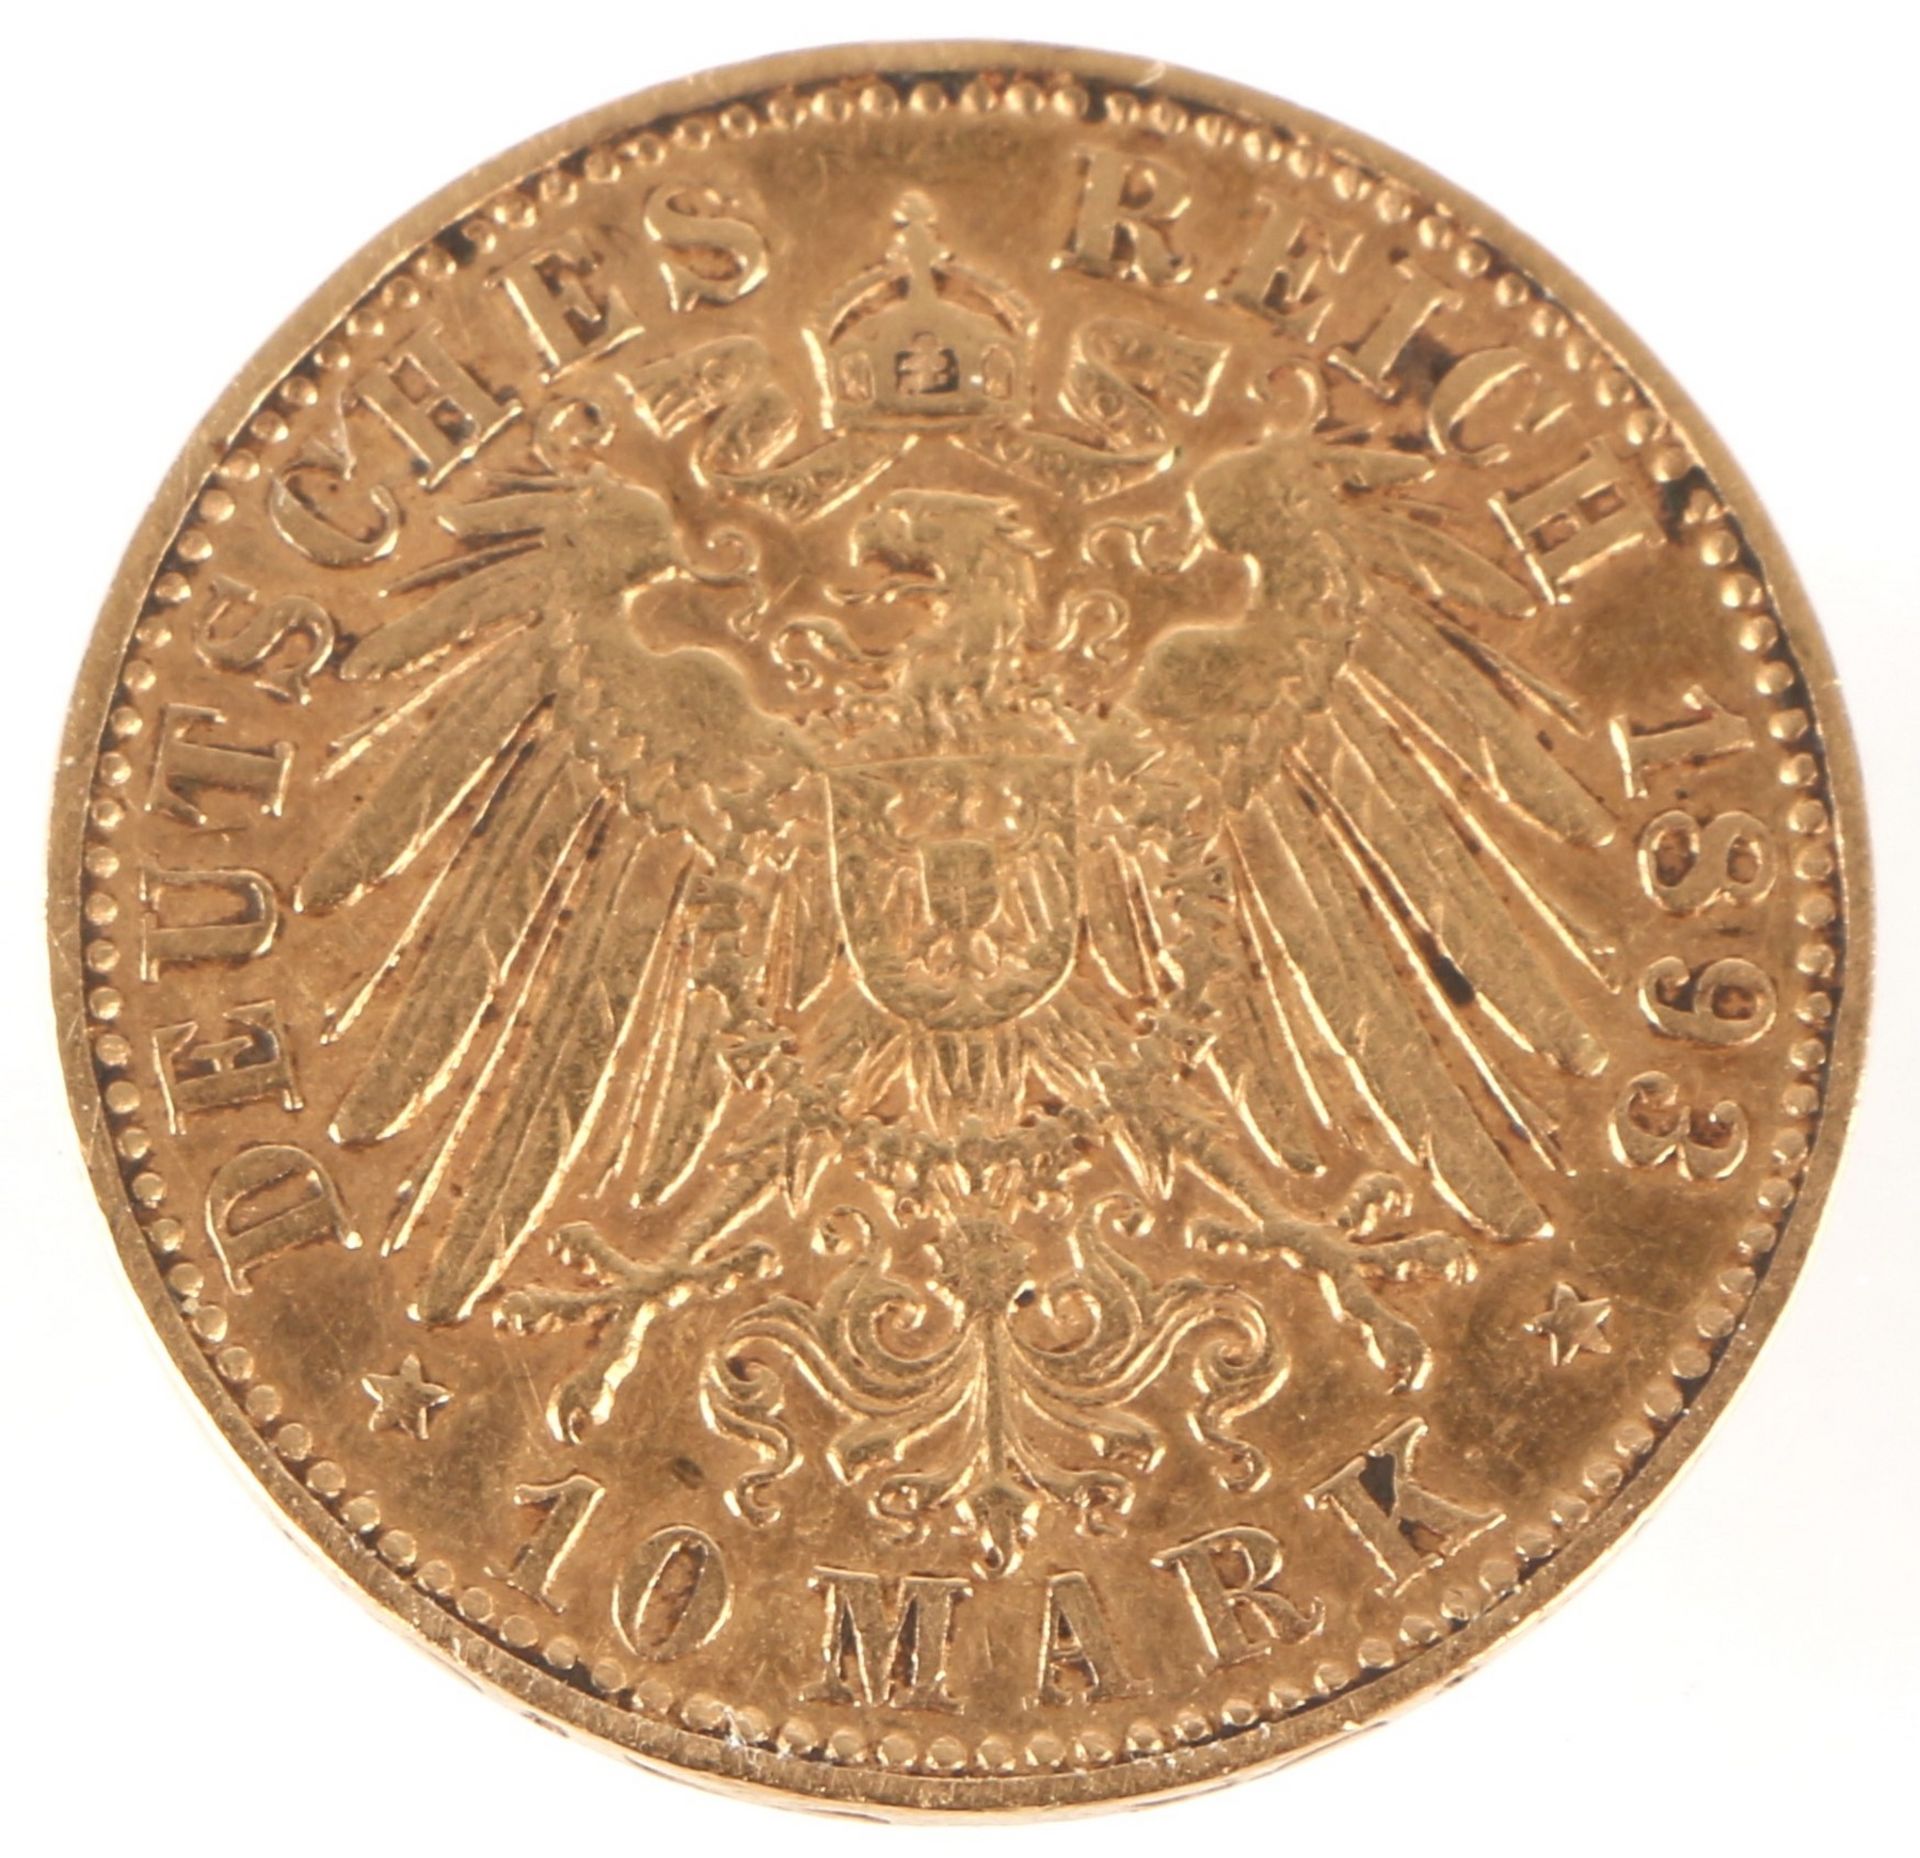 10 Mark Goldmünze 1893 F Wilhelm II Wuerttemberg, gold coin, - Image 2 of 2